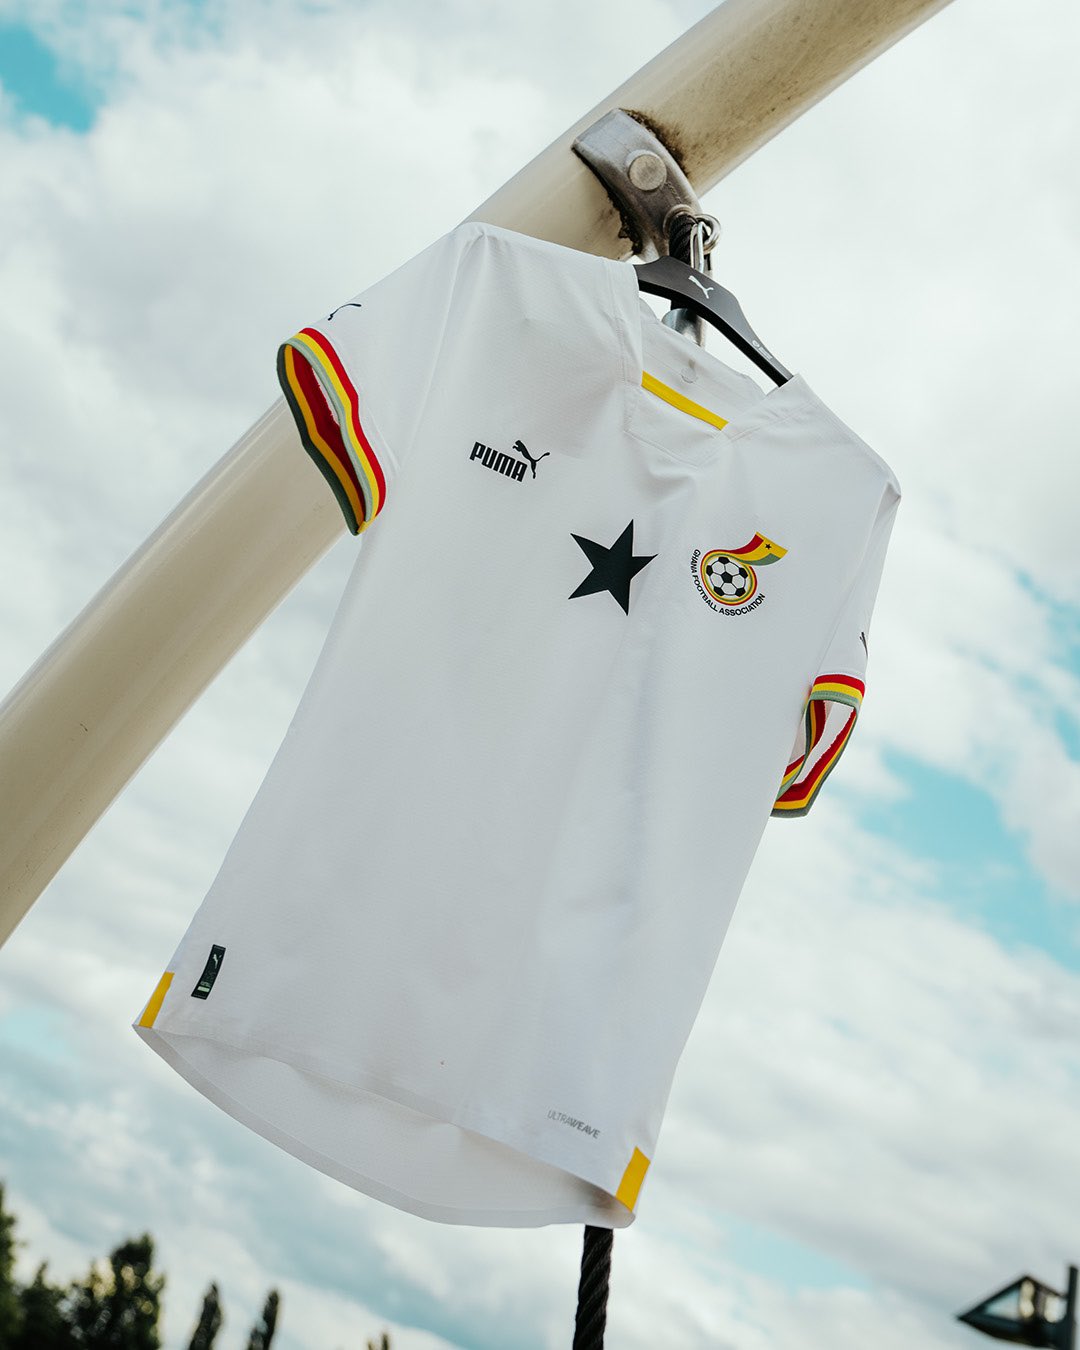 PUMA releases new Black Stars jersey - Ghana Business News